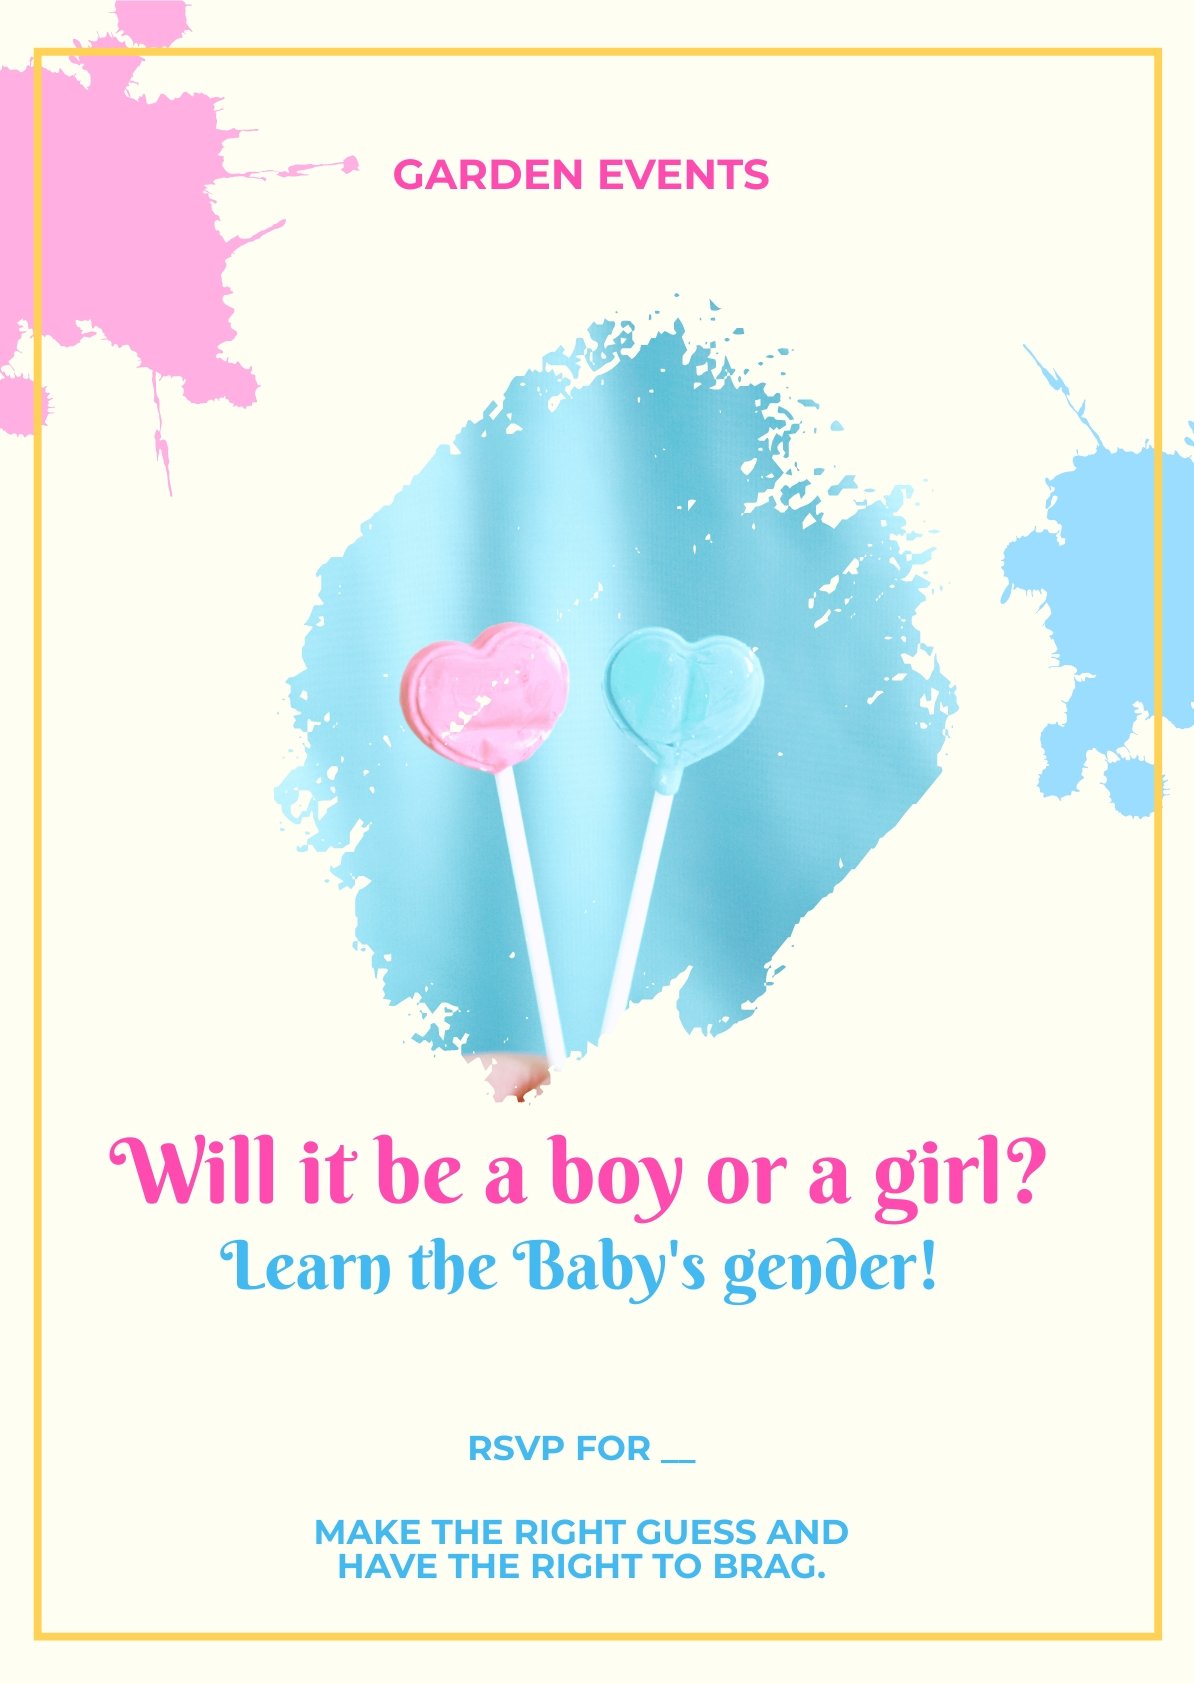 Gender Reveal Invitation Flyer